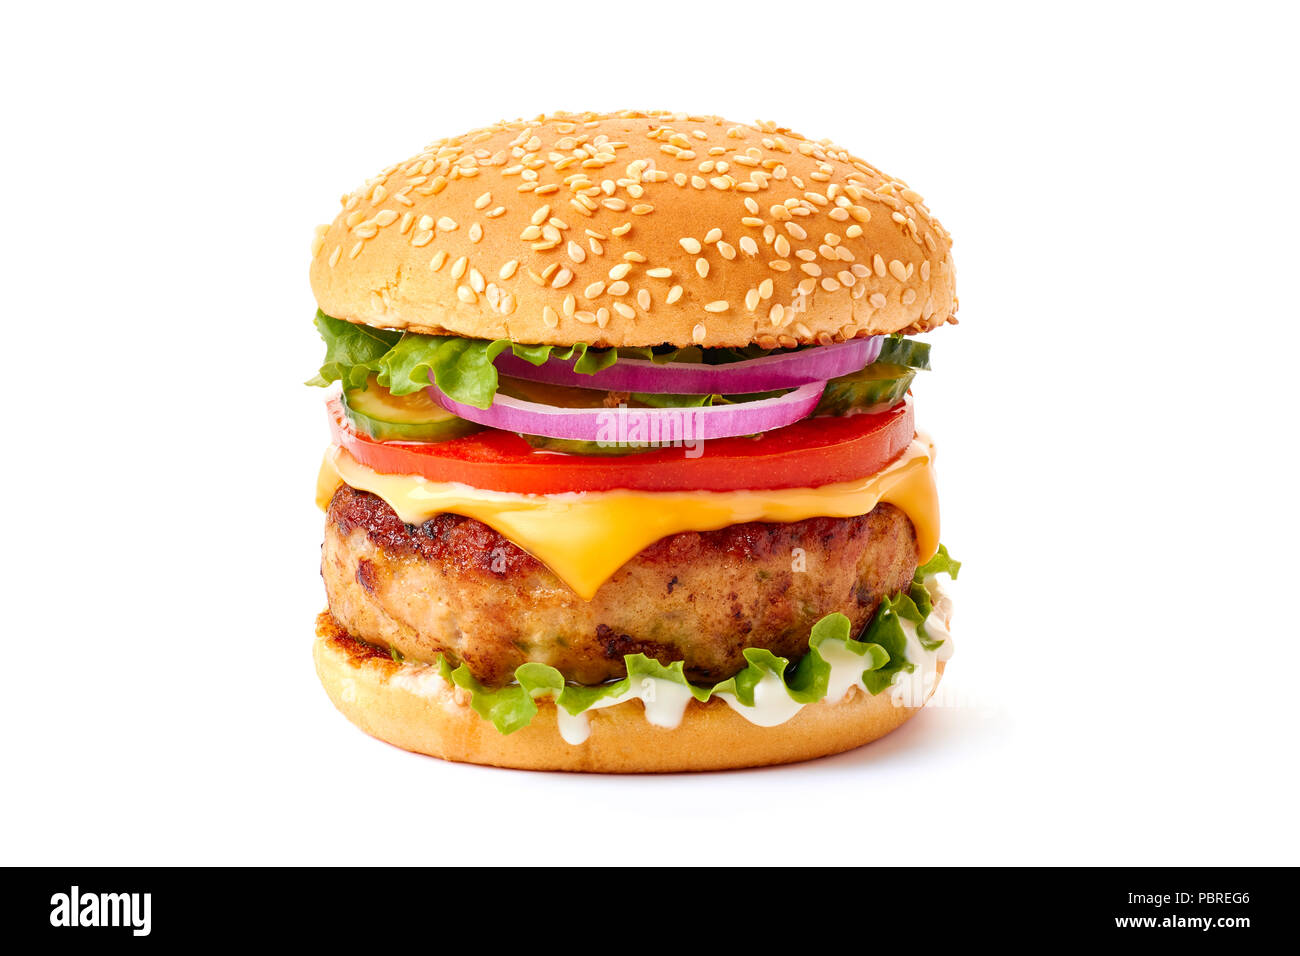 Juicy cheeseburger on white Stock Photo